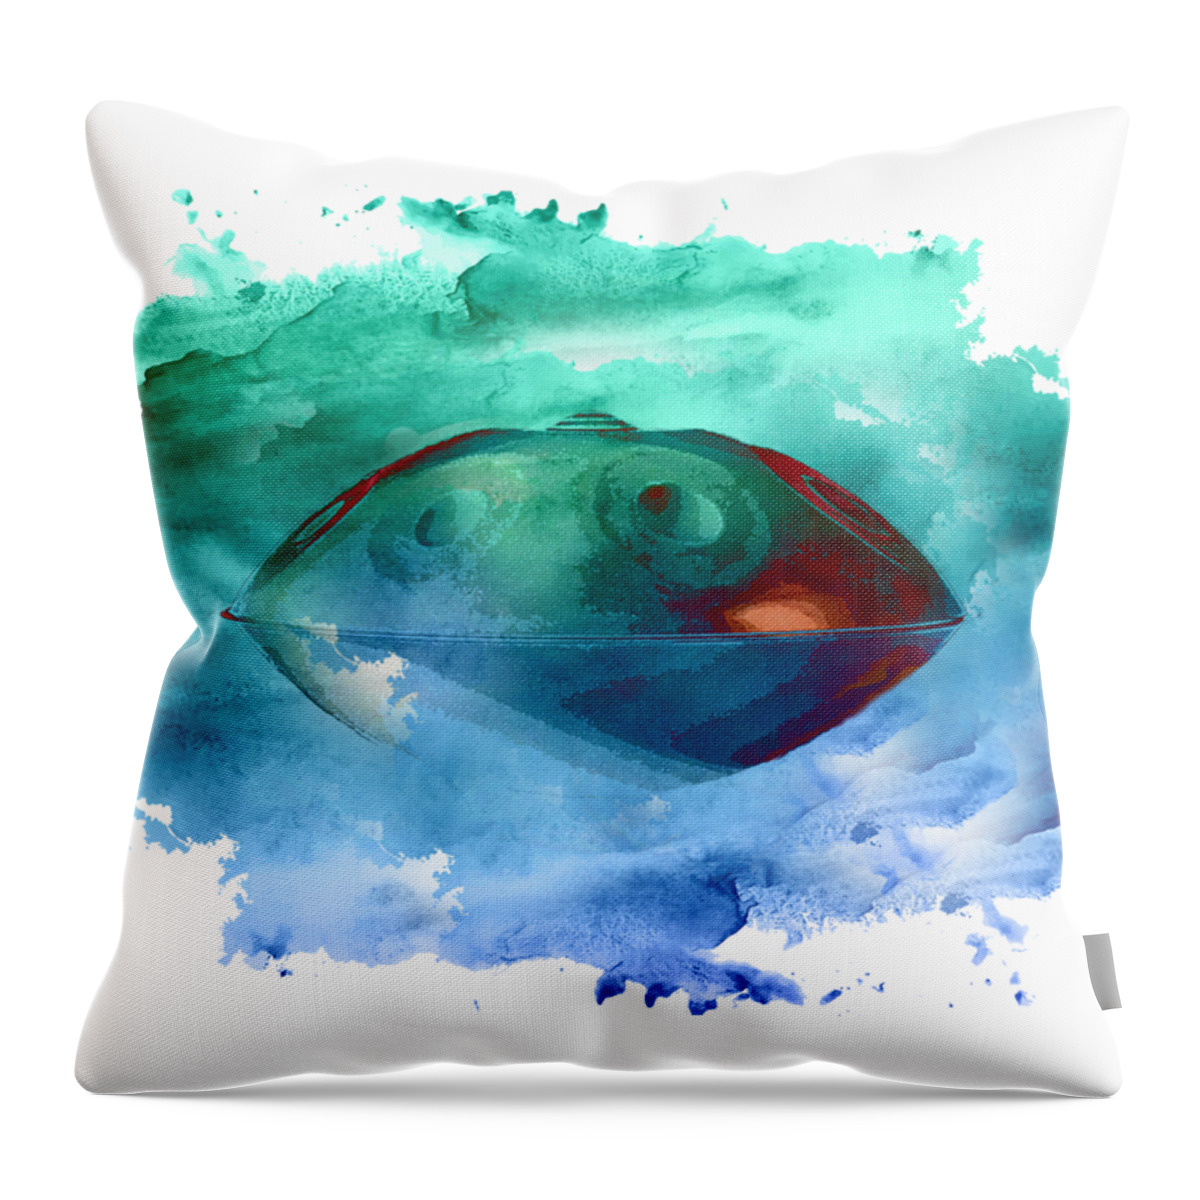 Handpan Throw Pillow featuring the digital art Handpan in blue by Alexa Szlavics